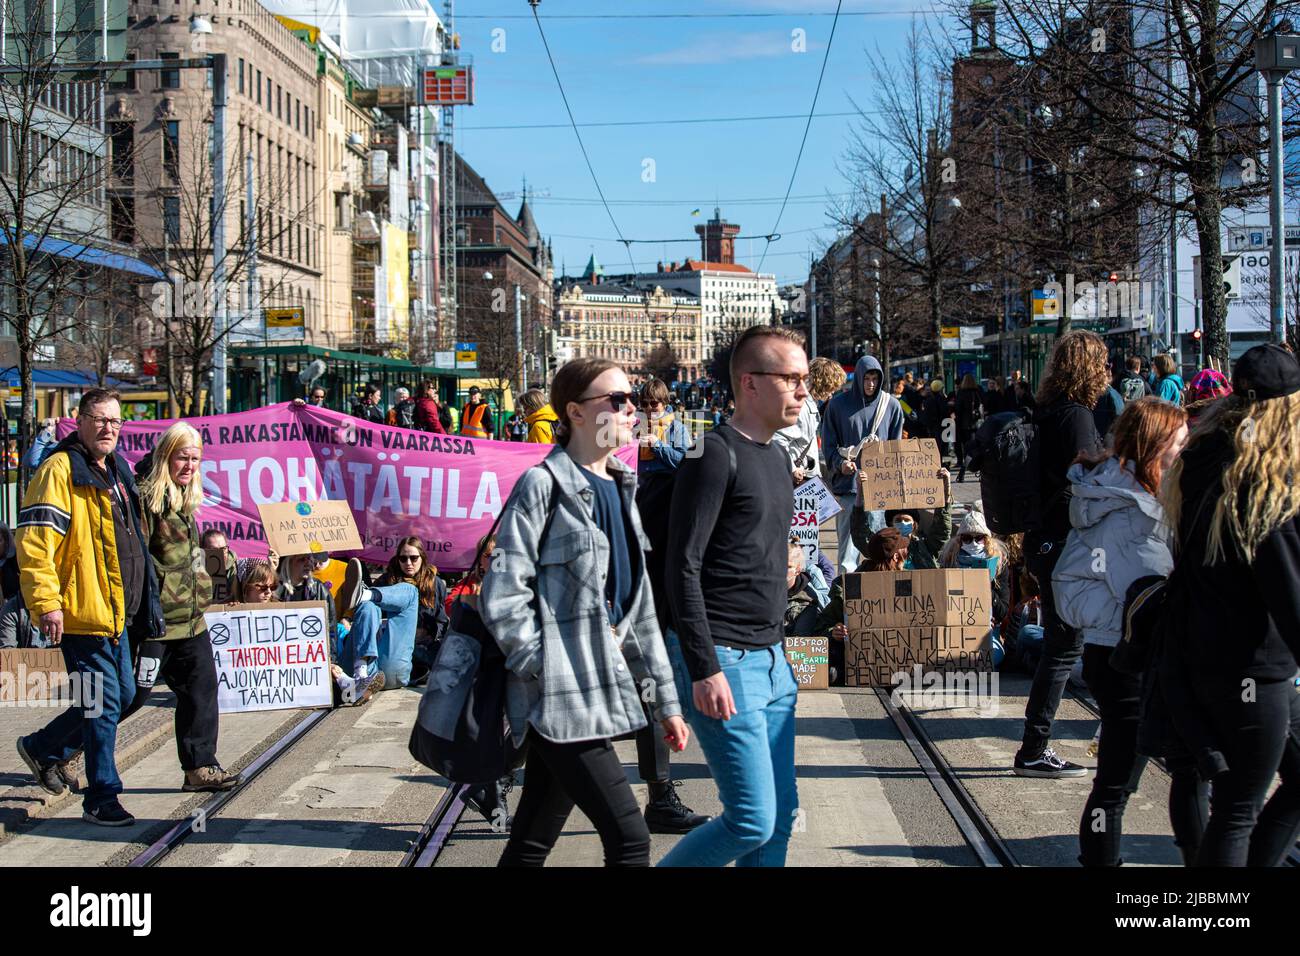 People passing Elokapina or Extinction Rebellion Finland street blocking demonstration in Helsinki, Finland. Stock Photo